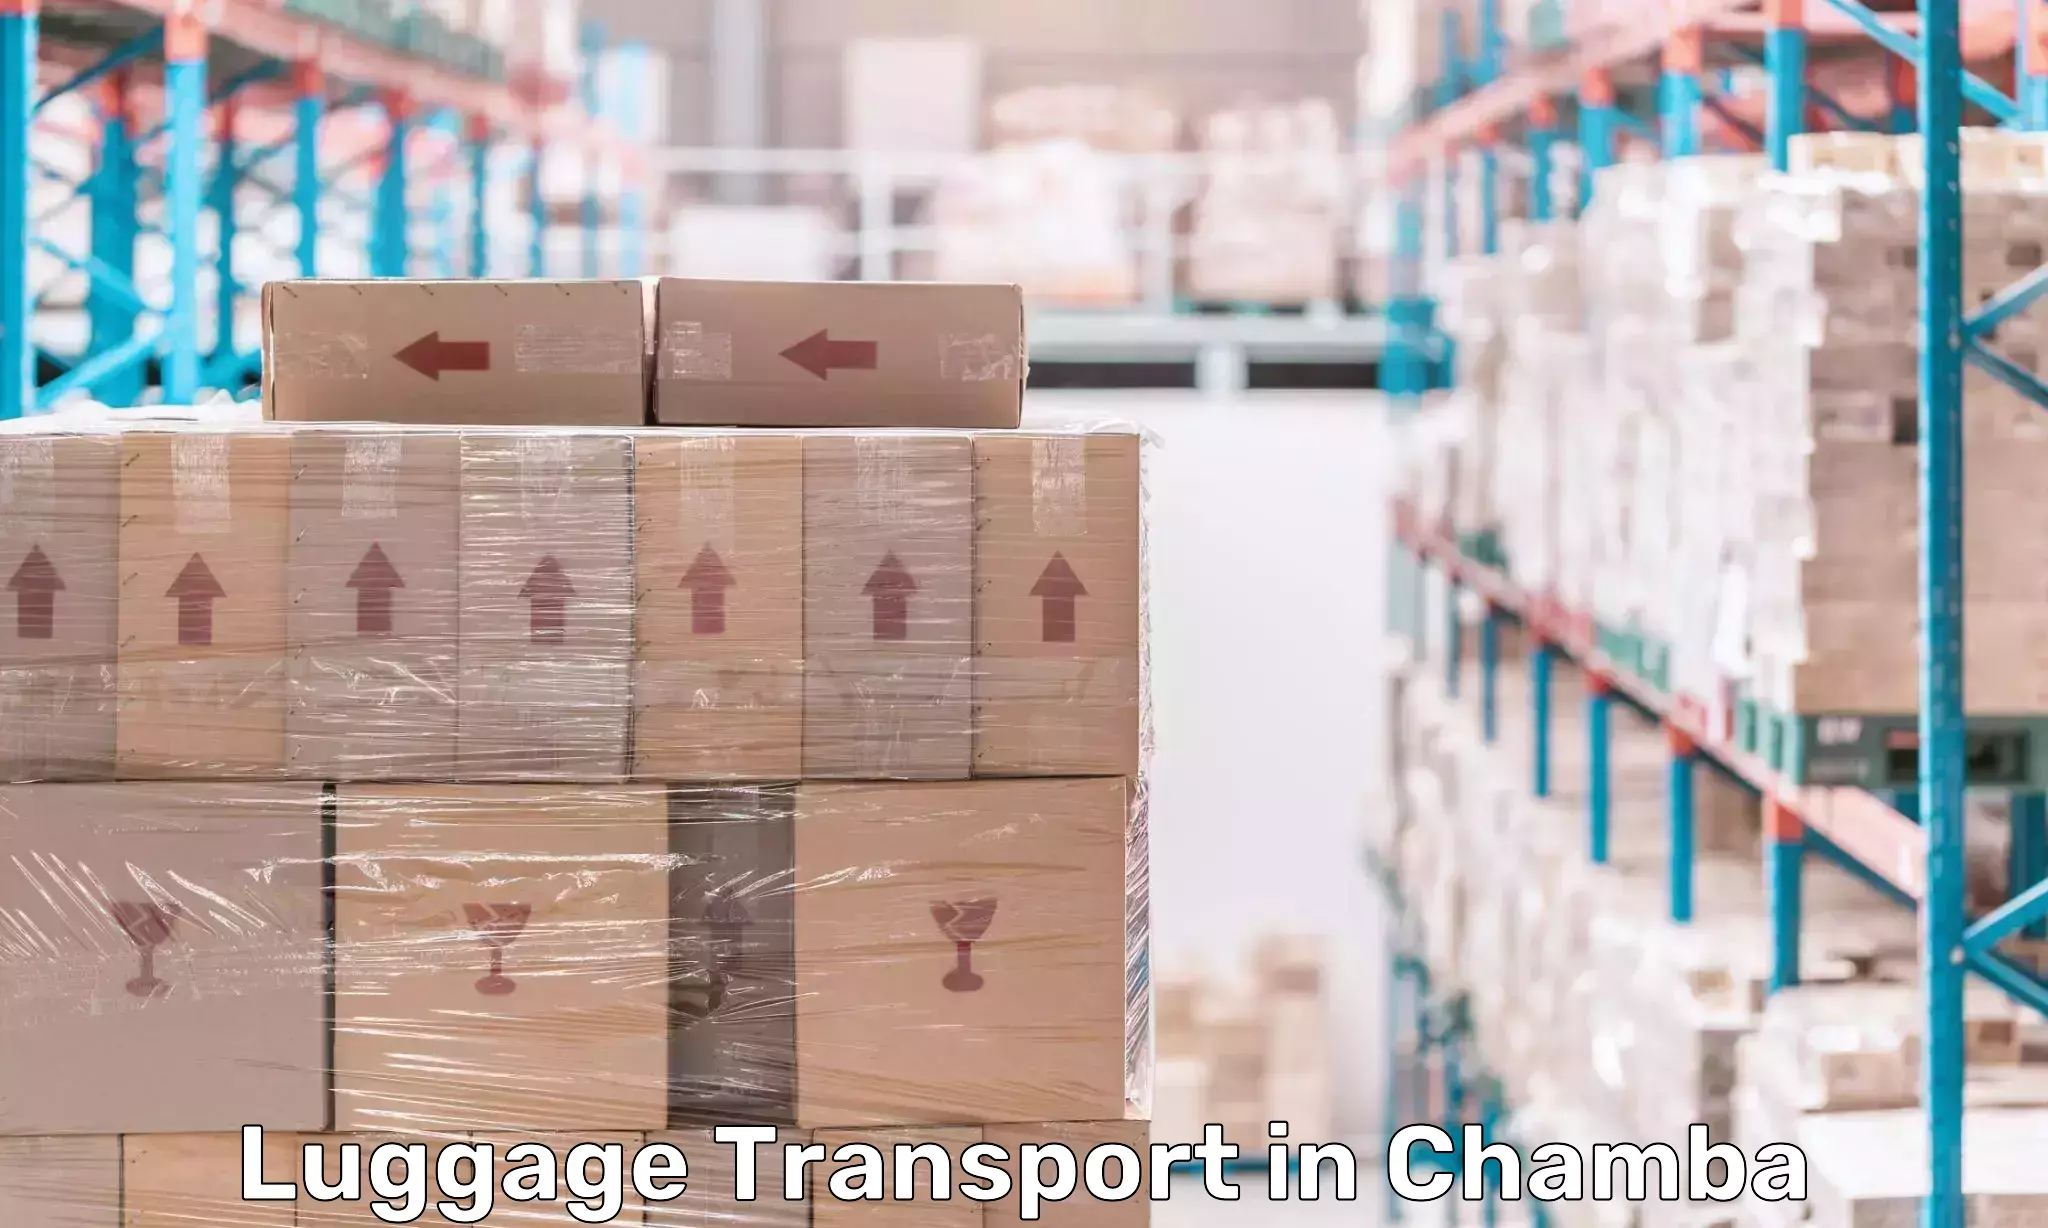 Luggage transport company in Chamba